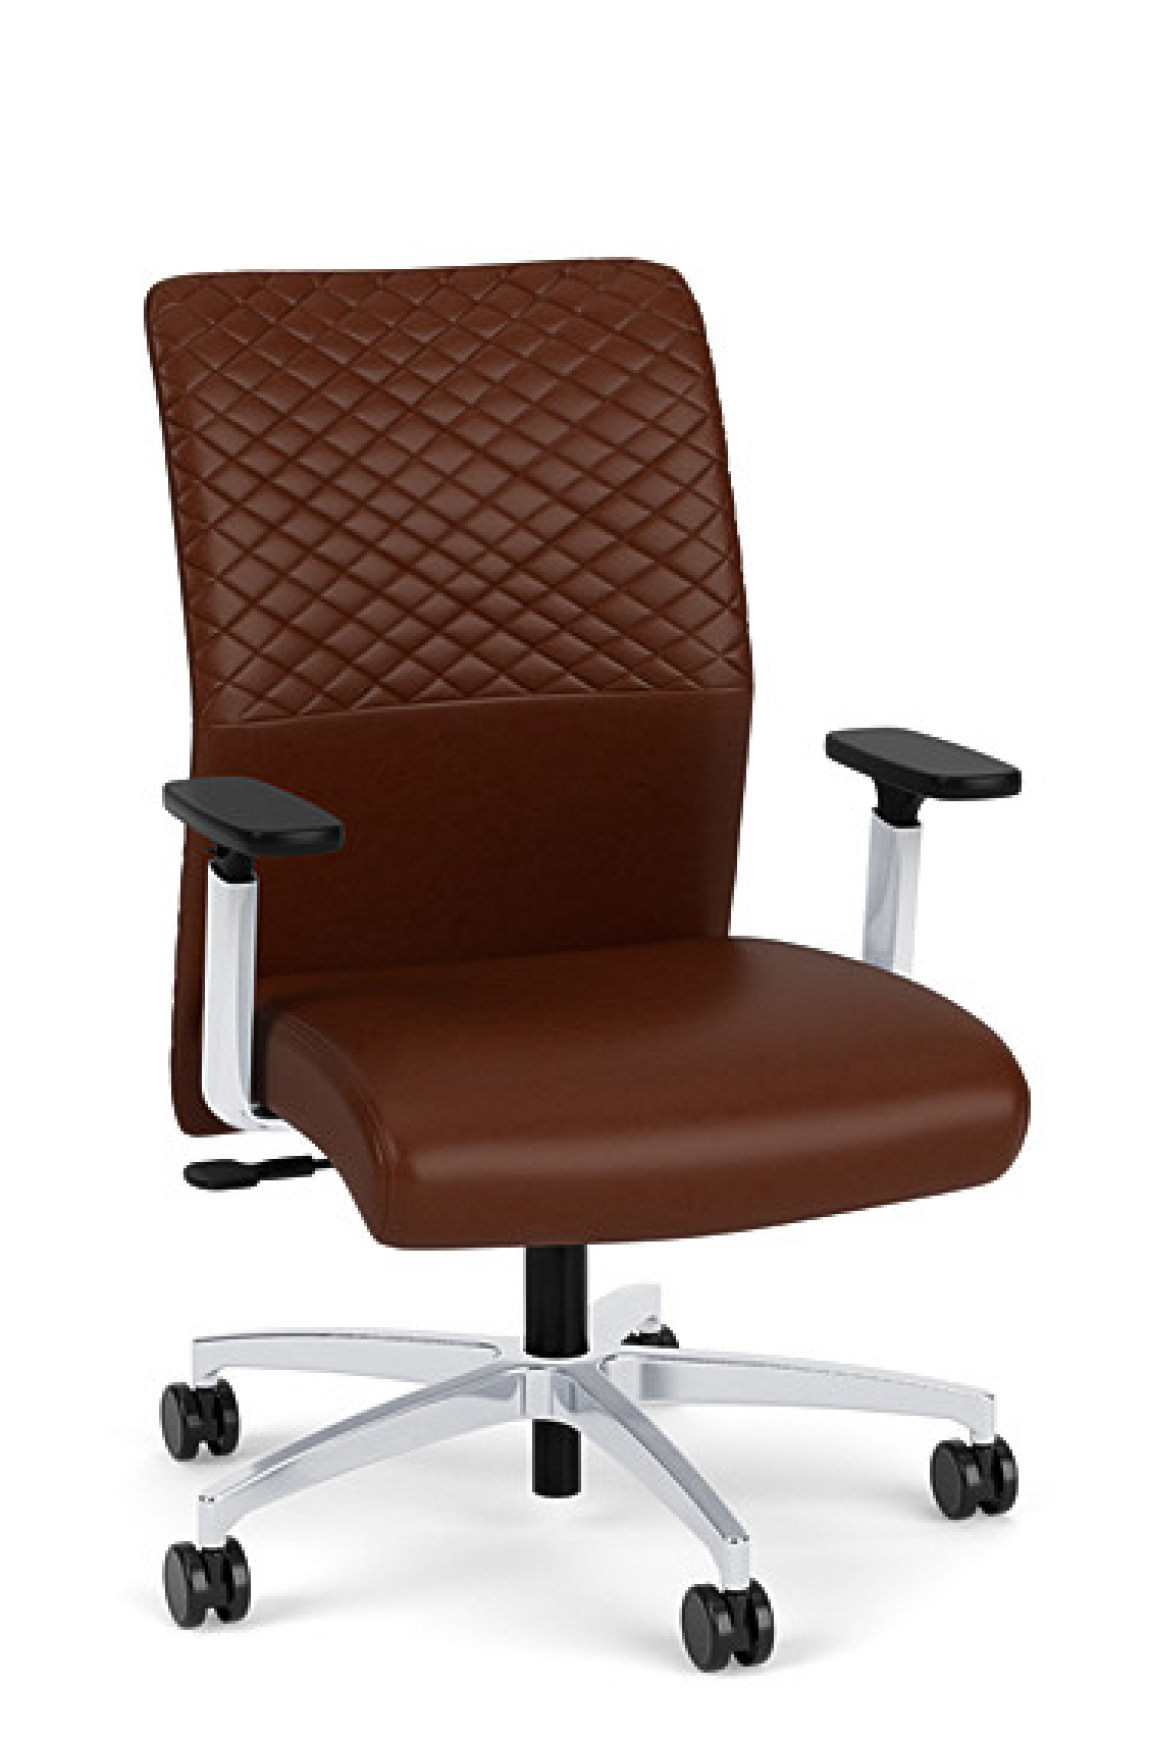 https://madisonliquidators.com/images/p/1150/13207-brown-leather-mid-back-office-chair-1.jpg